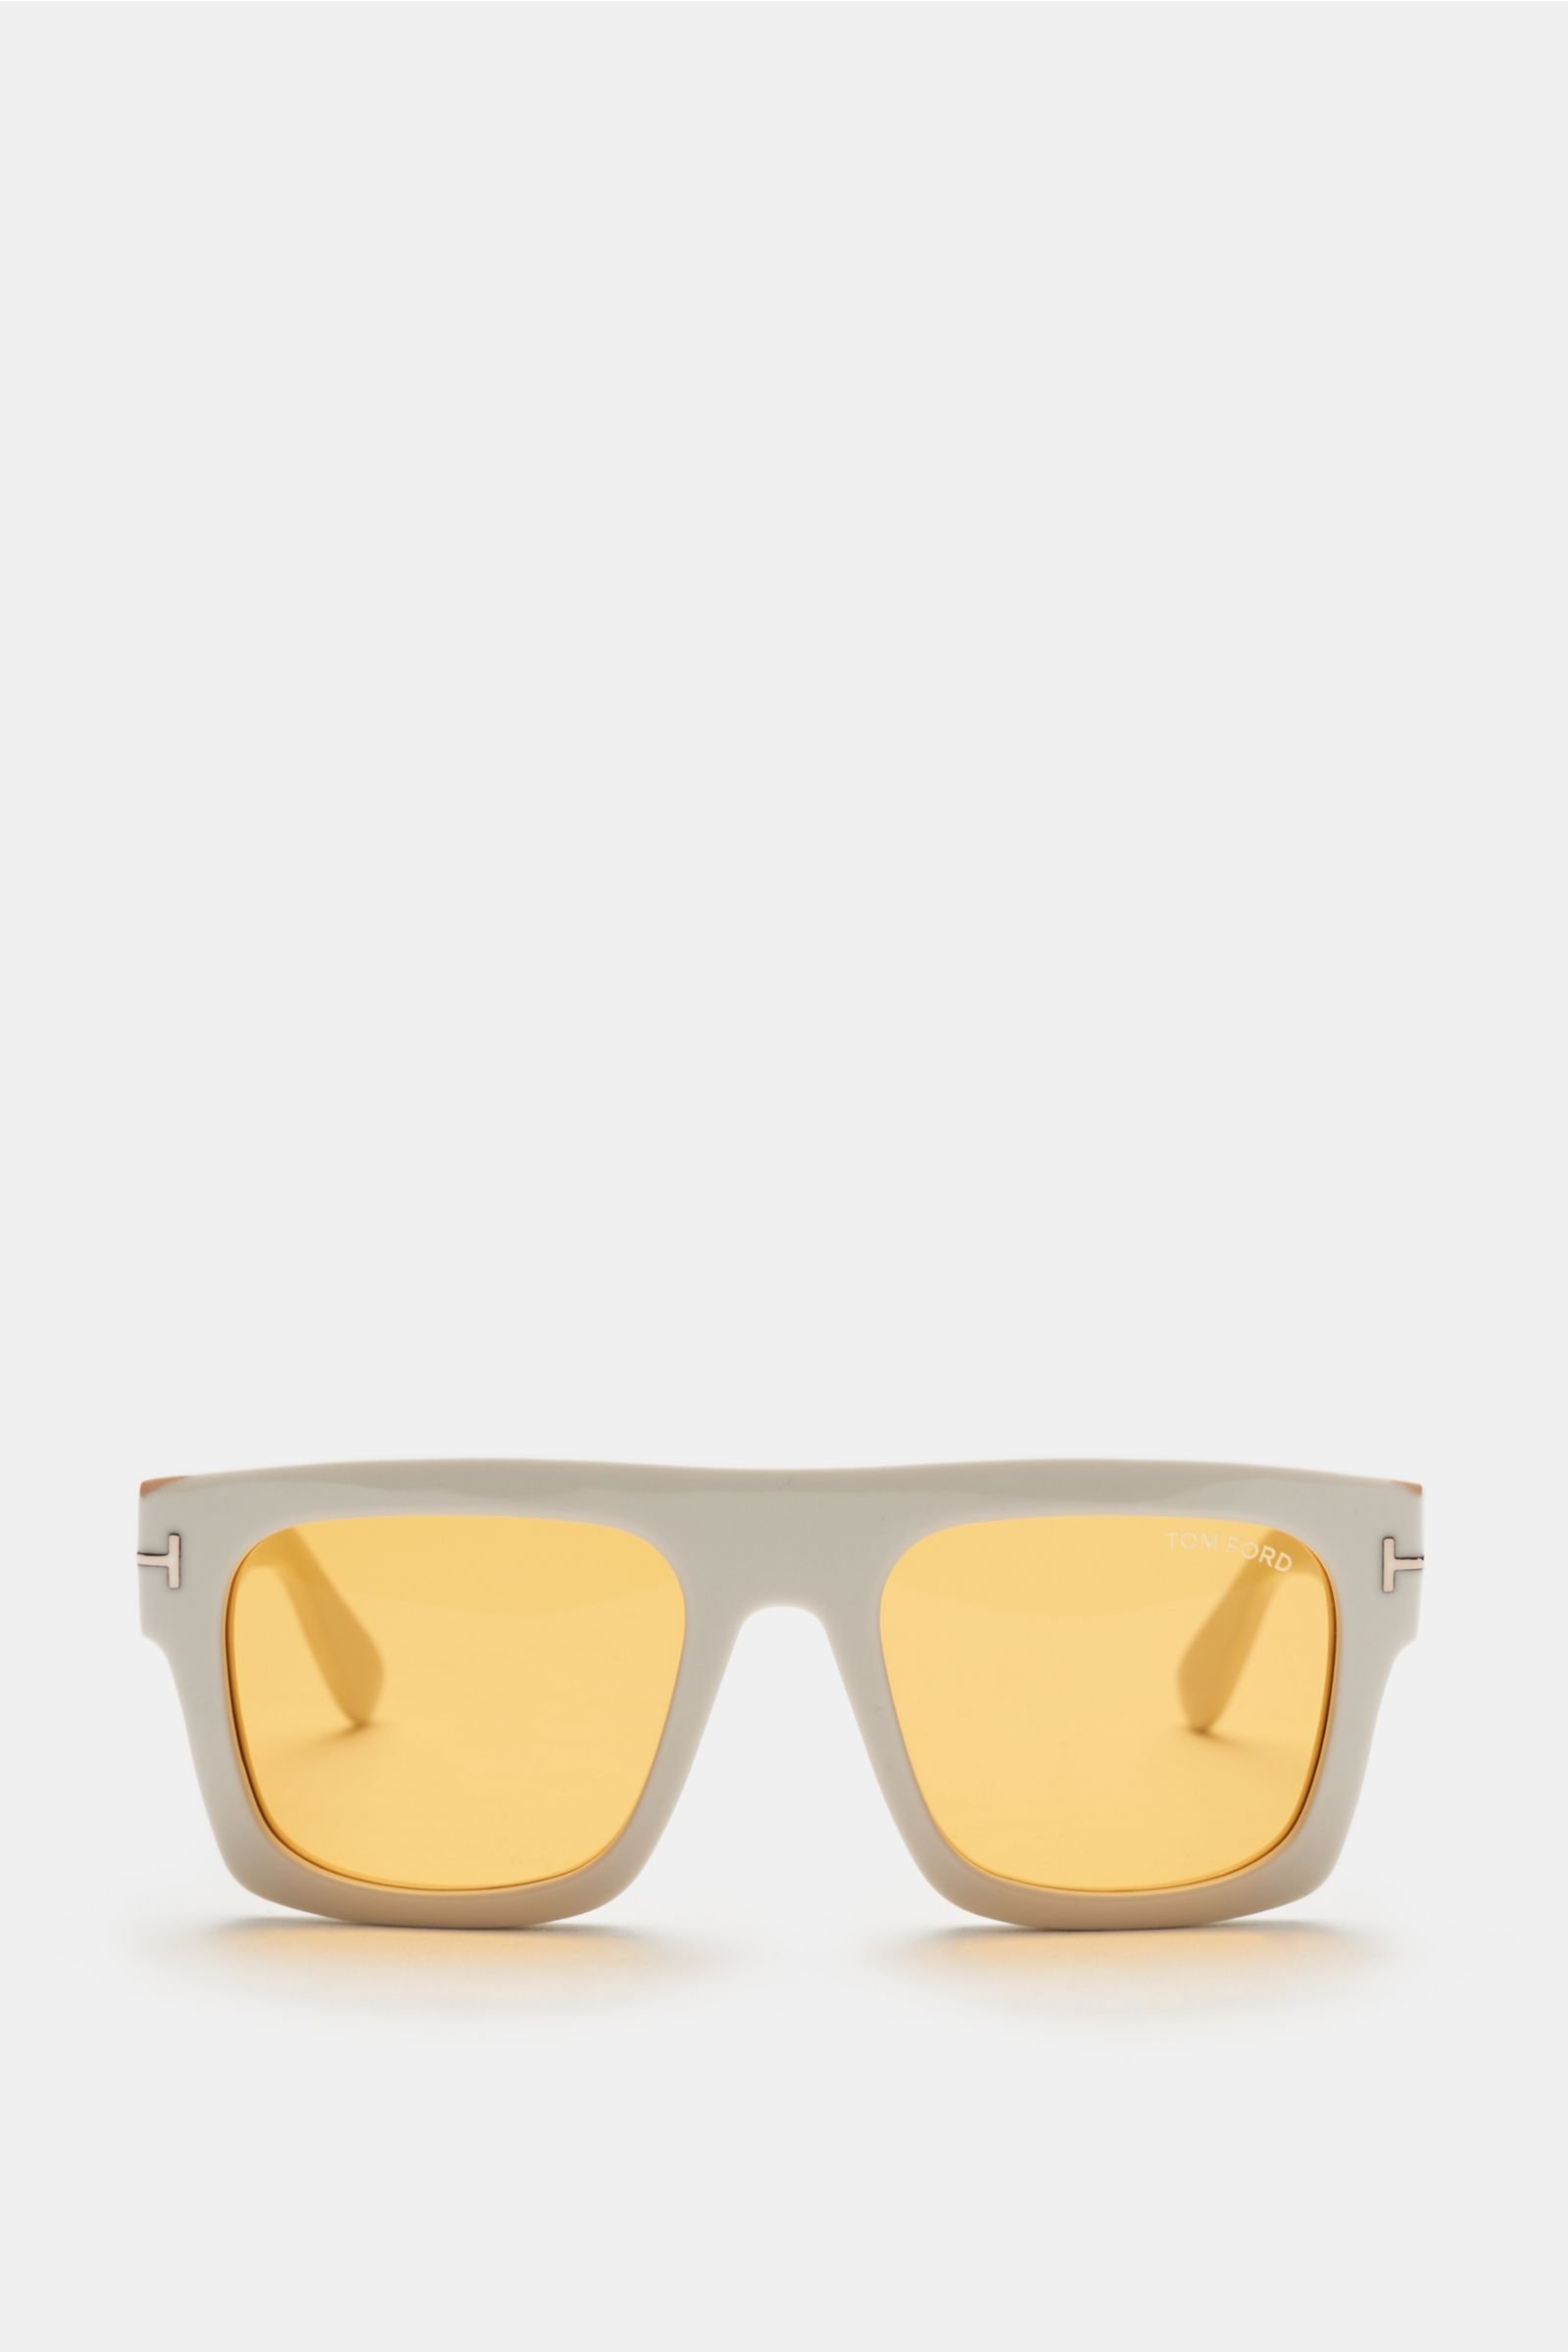 Sunglasses 'Fausto' off-white/yellow